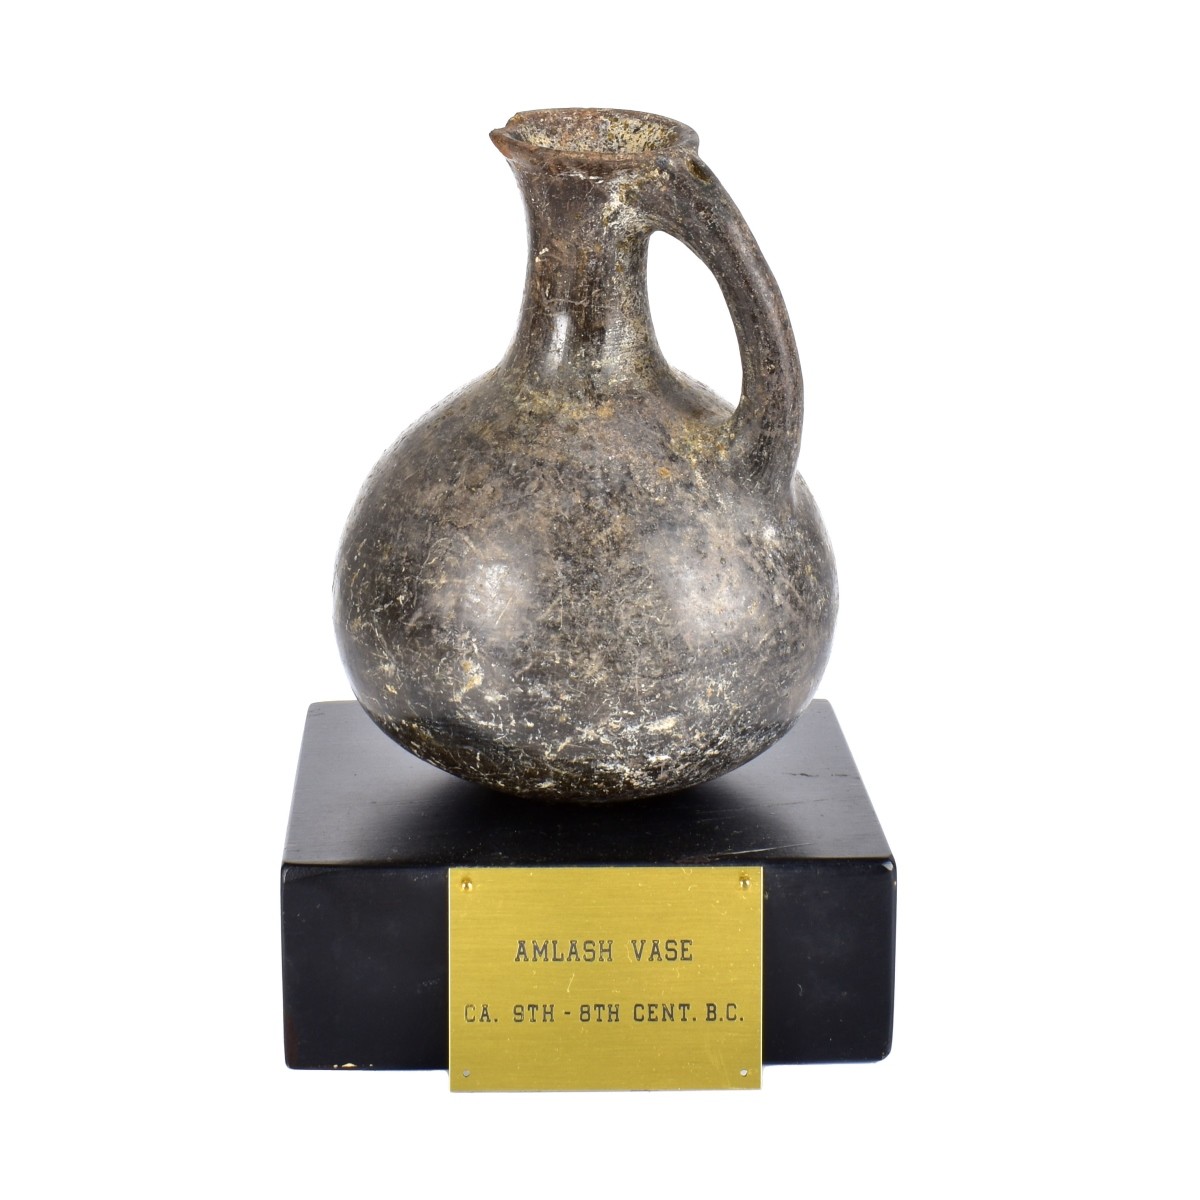 Iran - Amlash (CA. 9th - 8th C.) Ceramic Pitcher